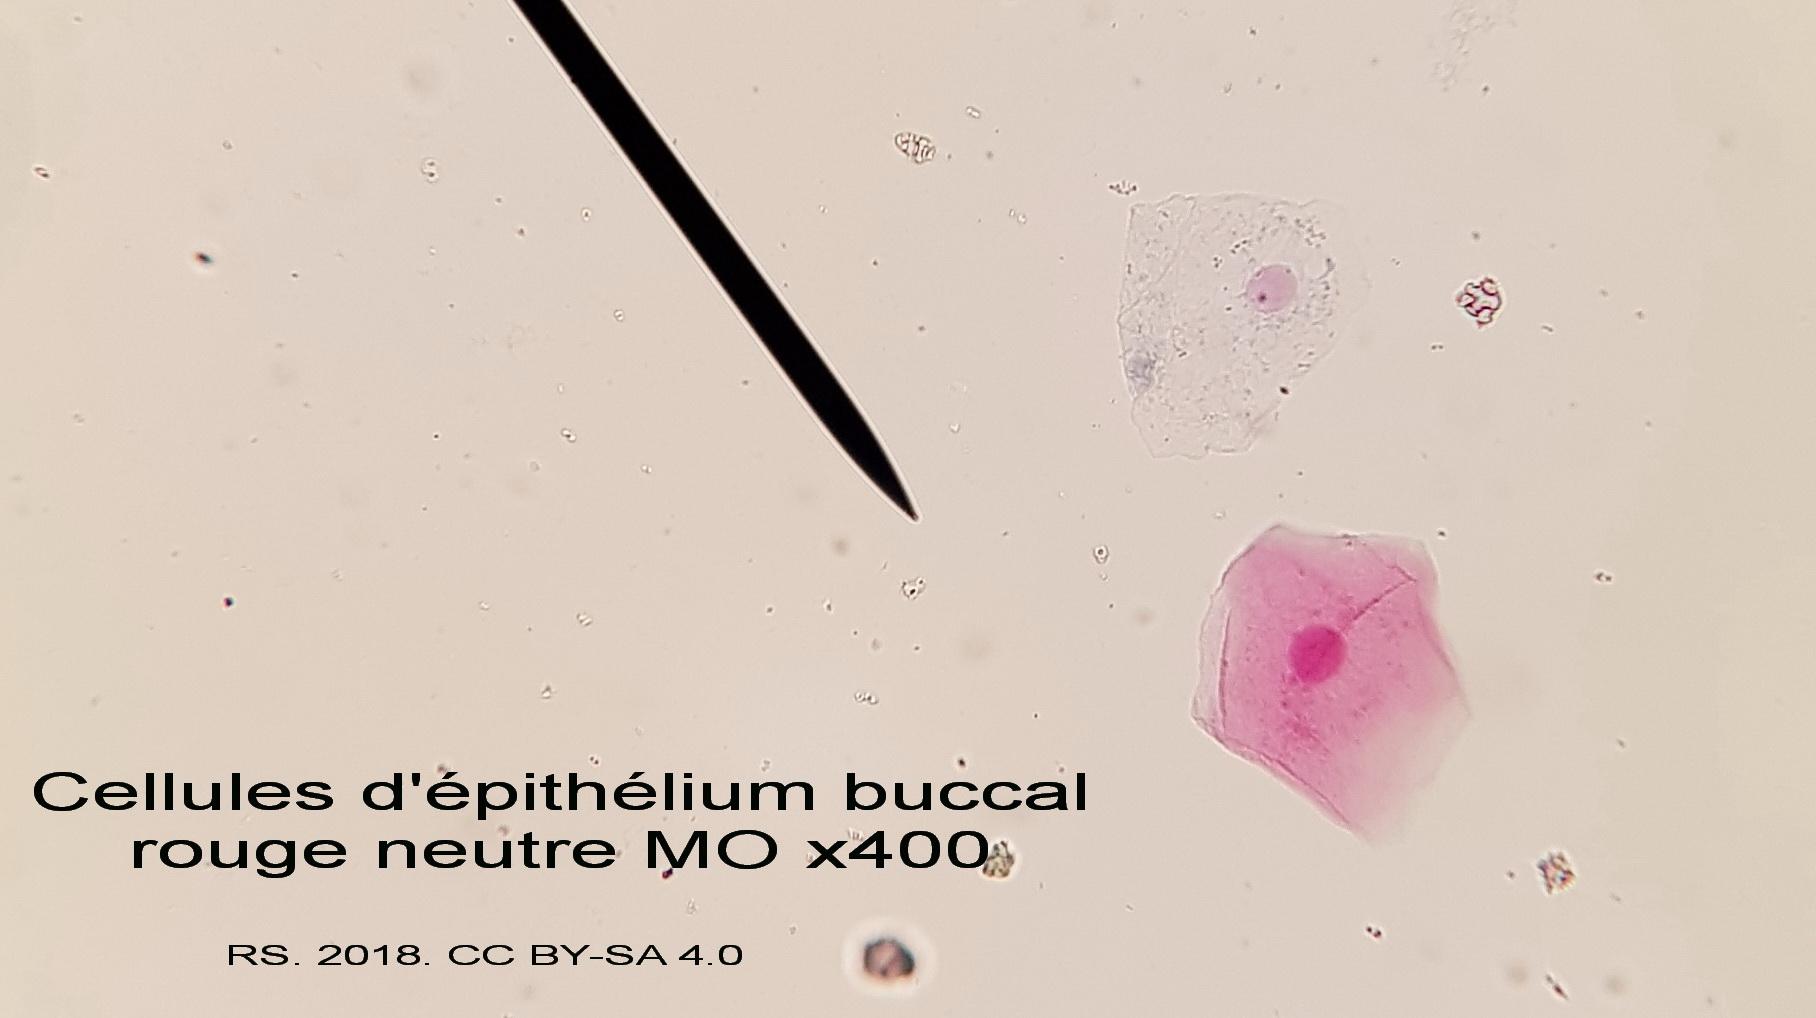 Cellule epithelium buccal